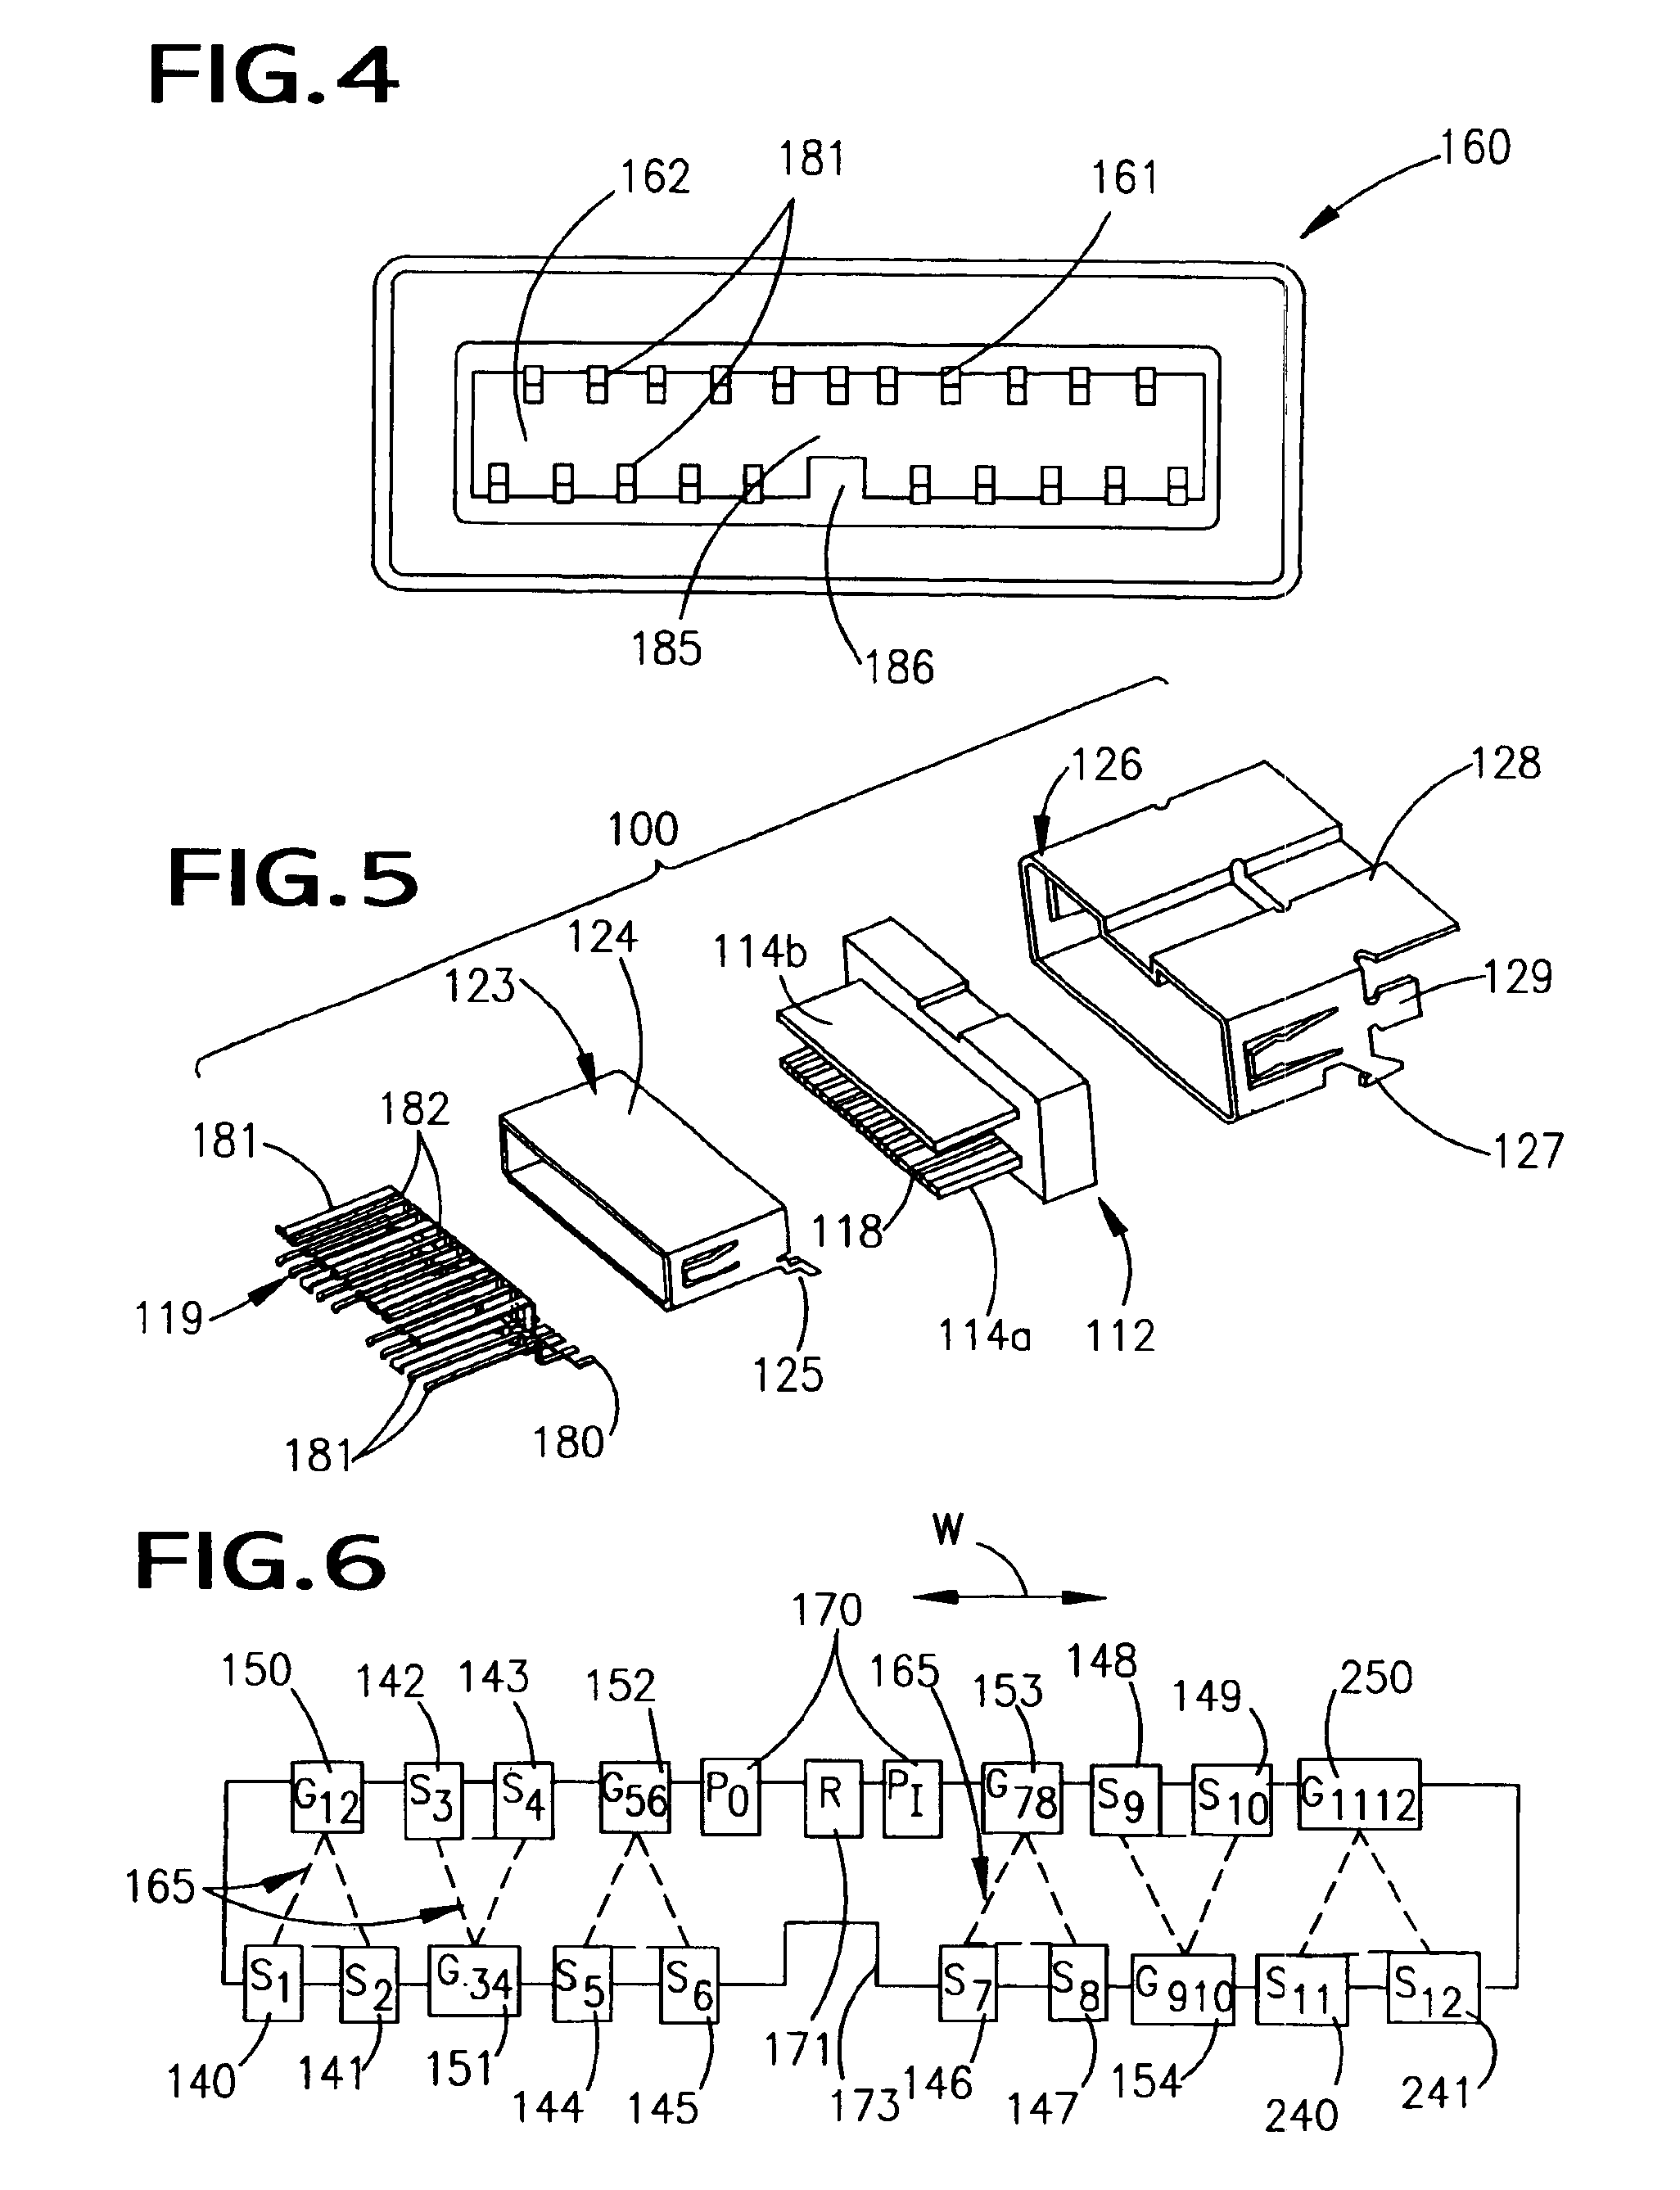 High-density, impedance-tuned connector having modular construction